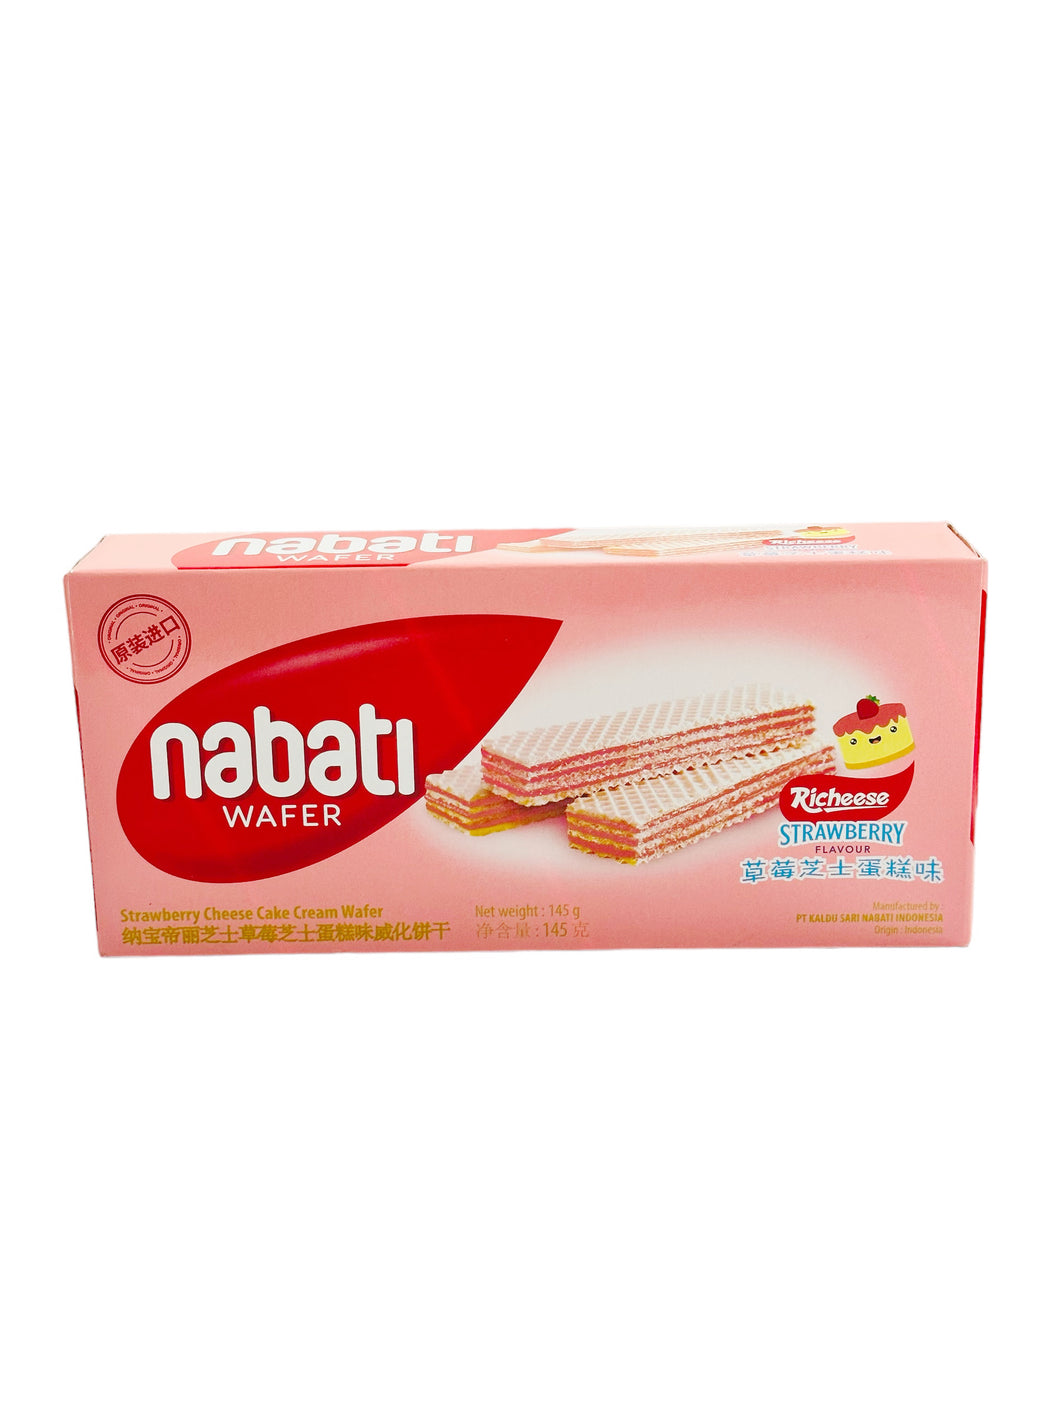 Nabati Strawberry Flav Cookies 145g 纳宝帝草莓芝士威化